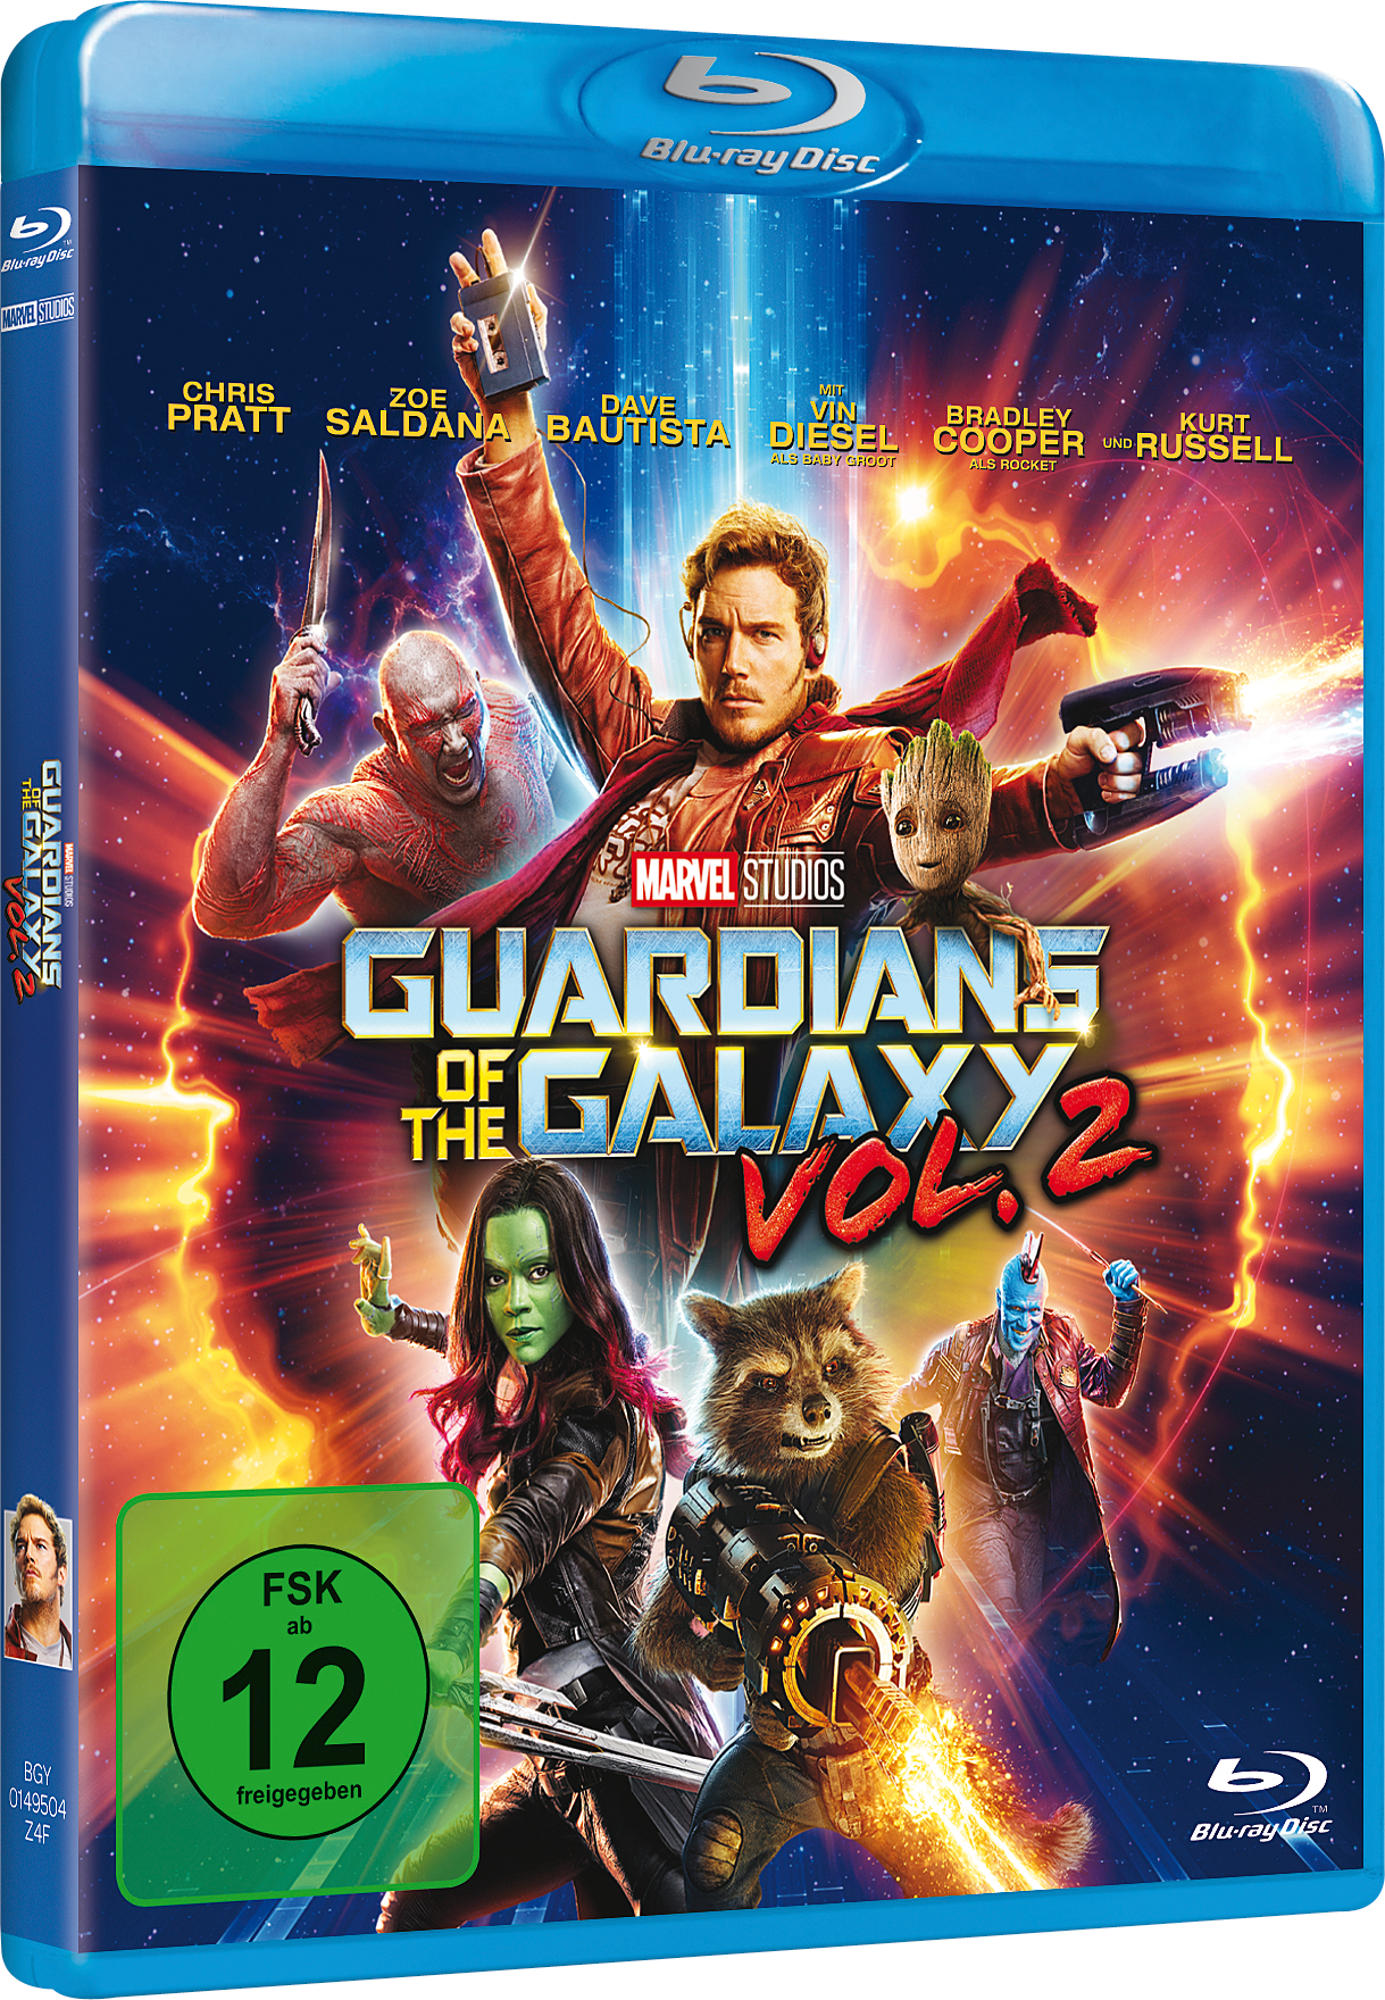 Vol. Blu-ray of 2 Guardians Galaxy the